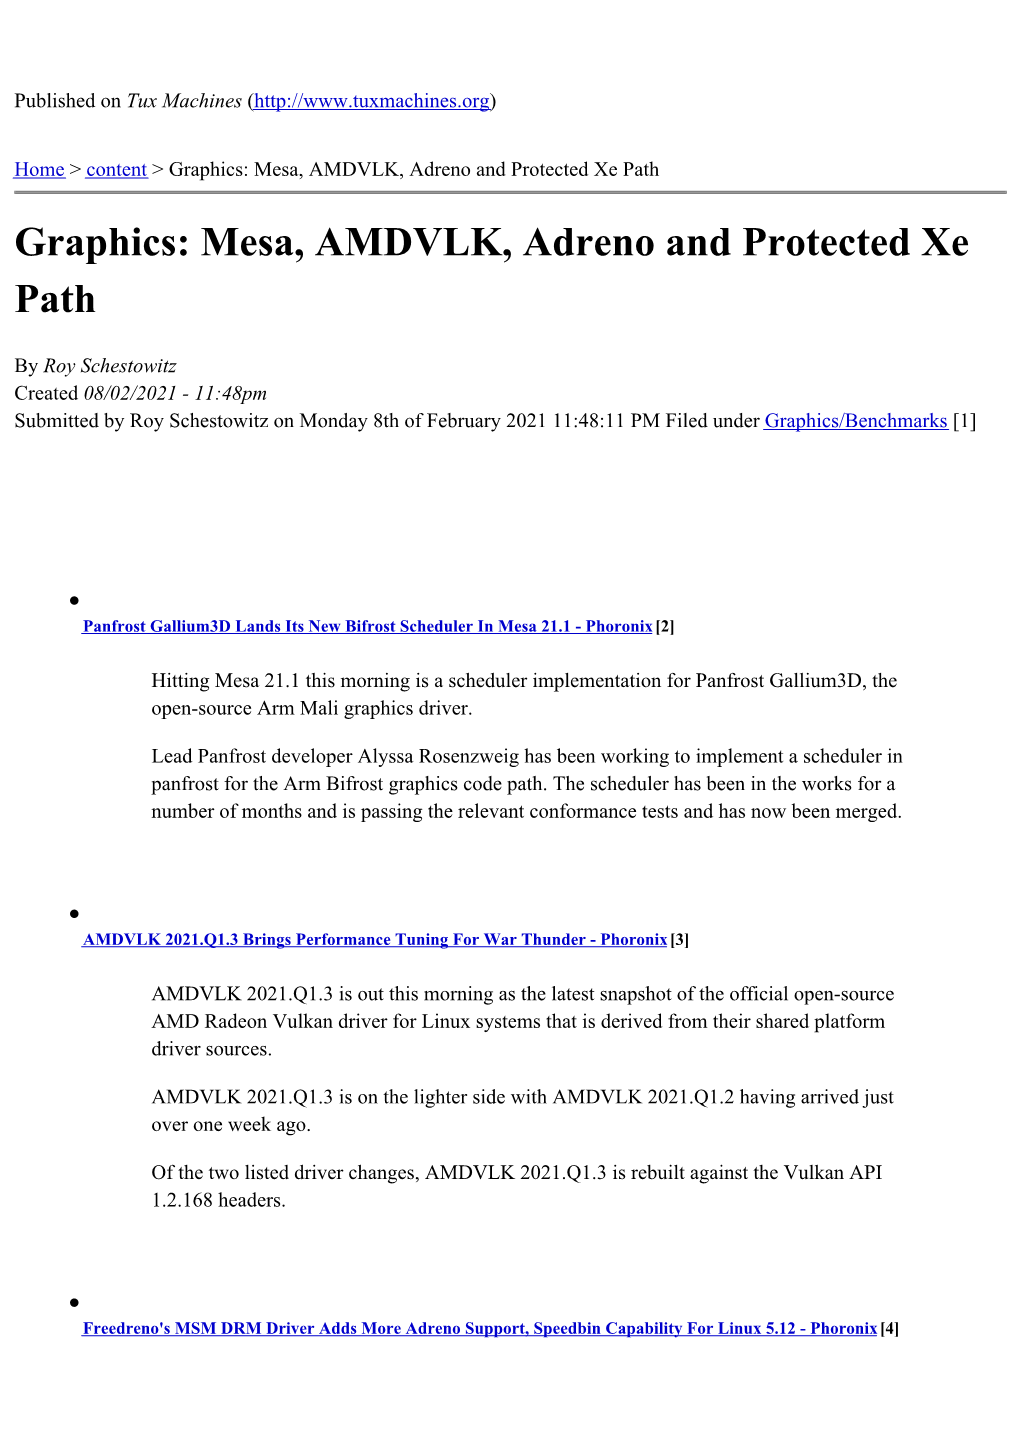 Graphics: Mesa, AMDVLK, Adreno and Protected Xe Path